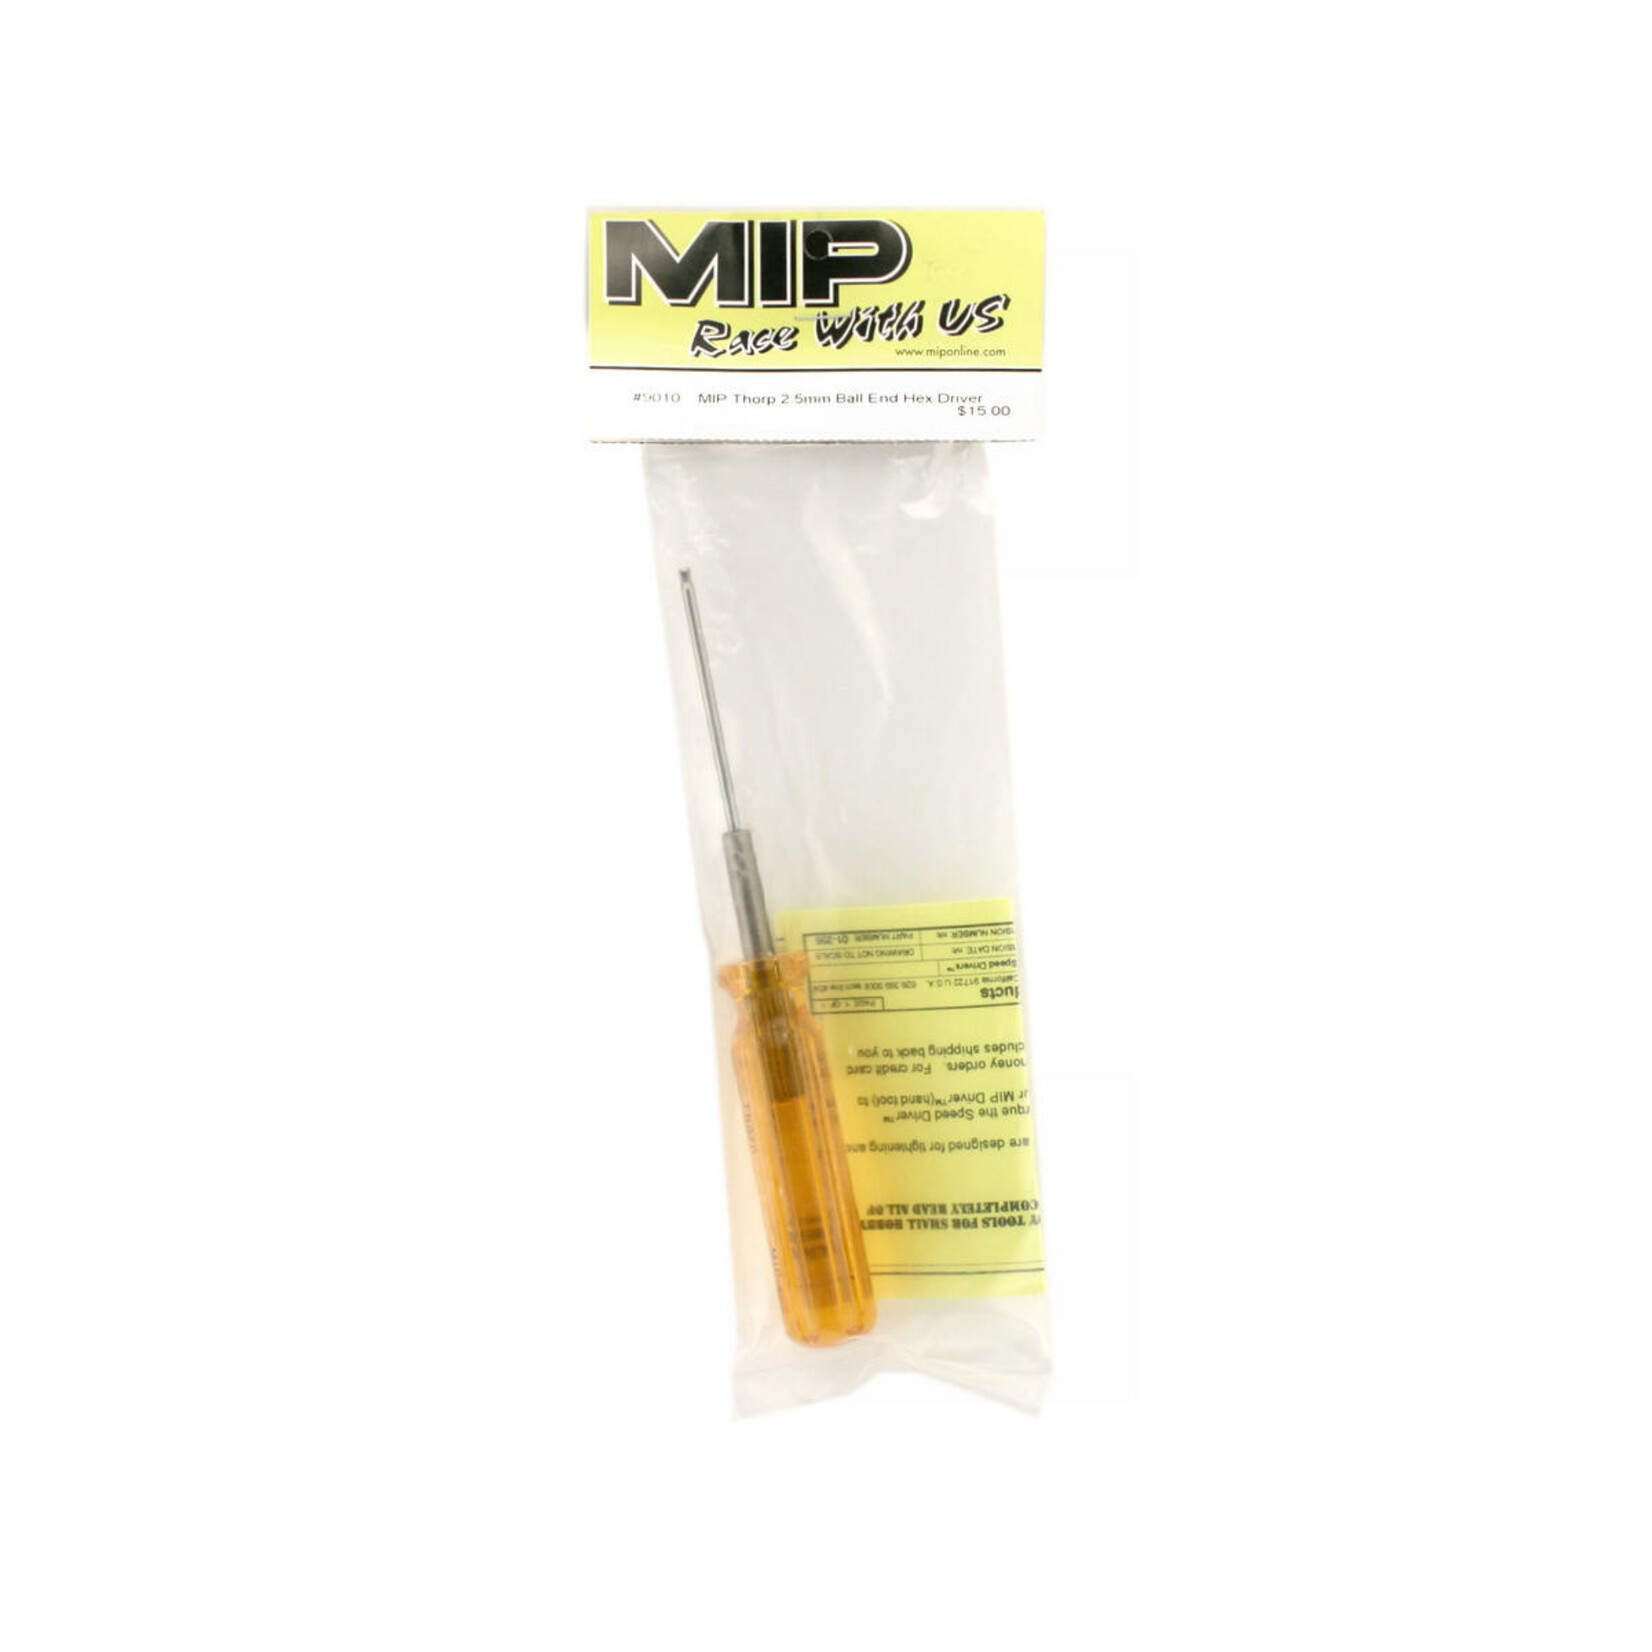 MIP MIP Thorp Ball End Hex Driver (2.5mm) #9010